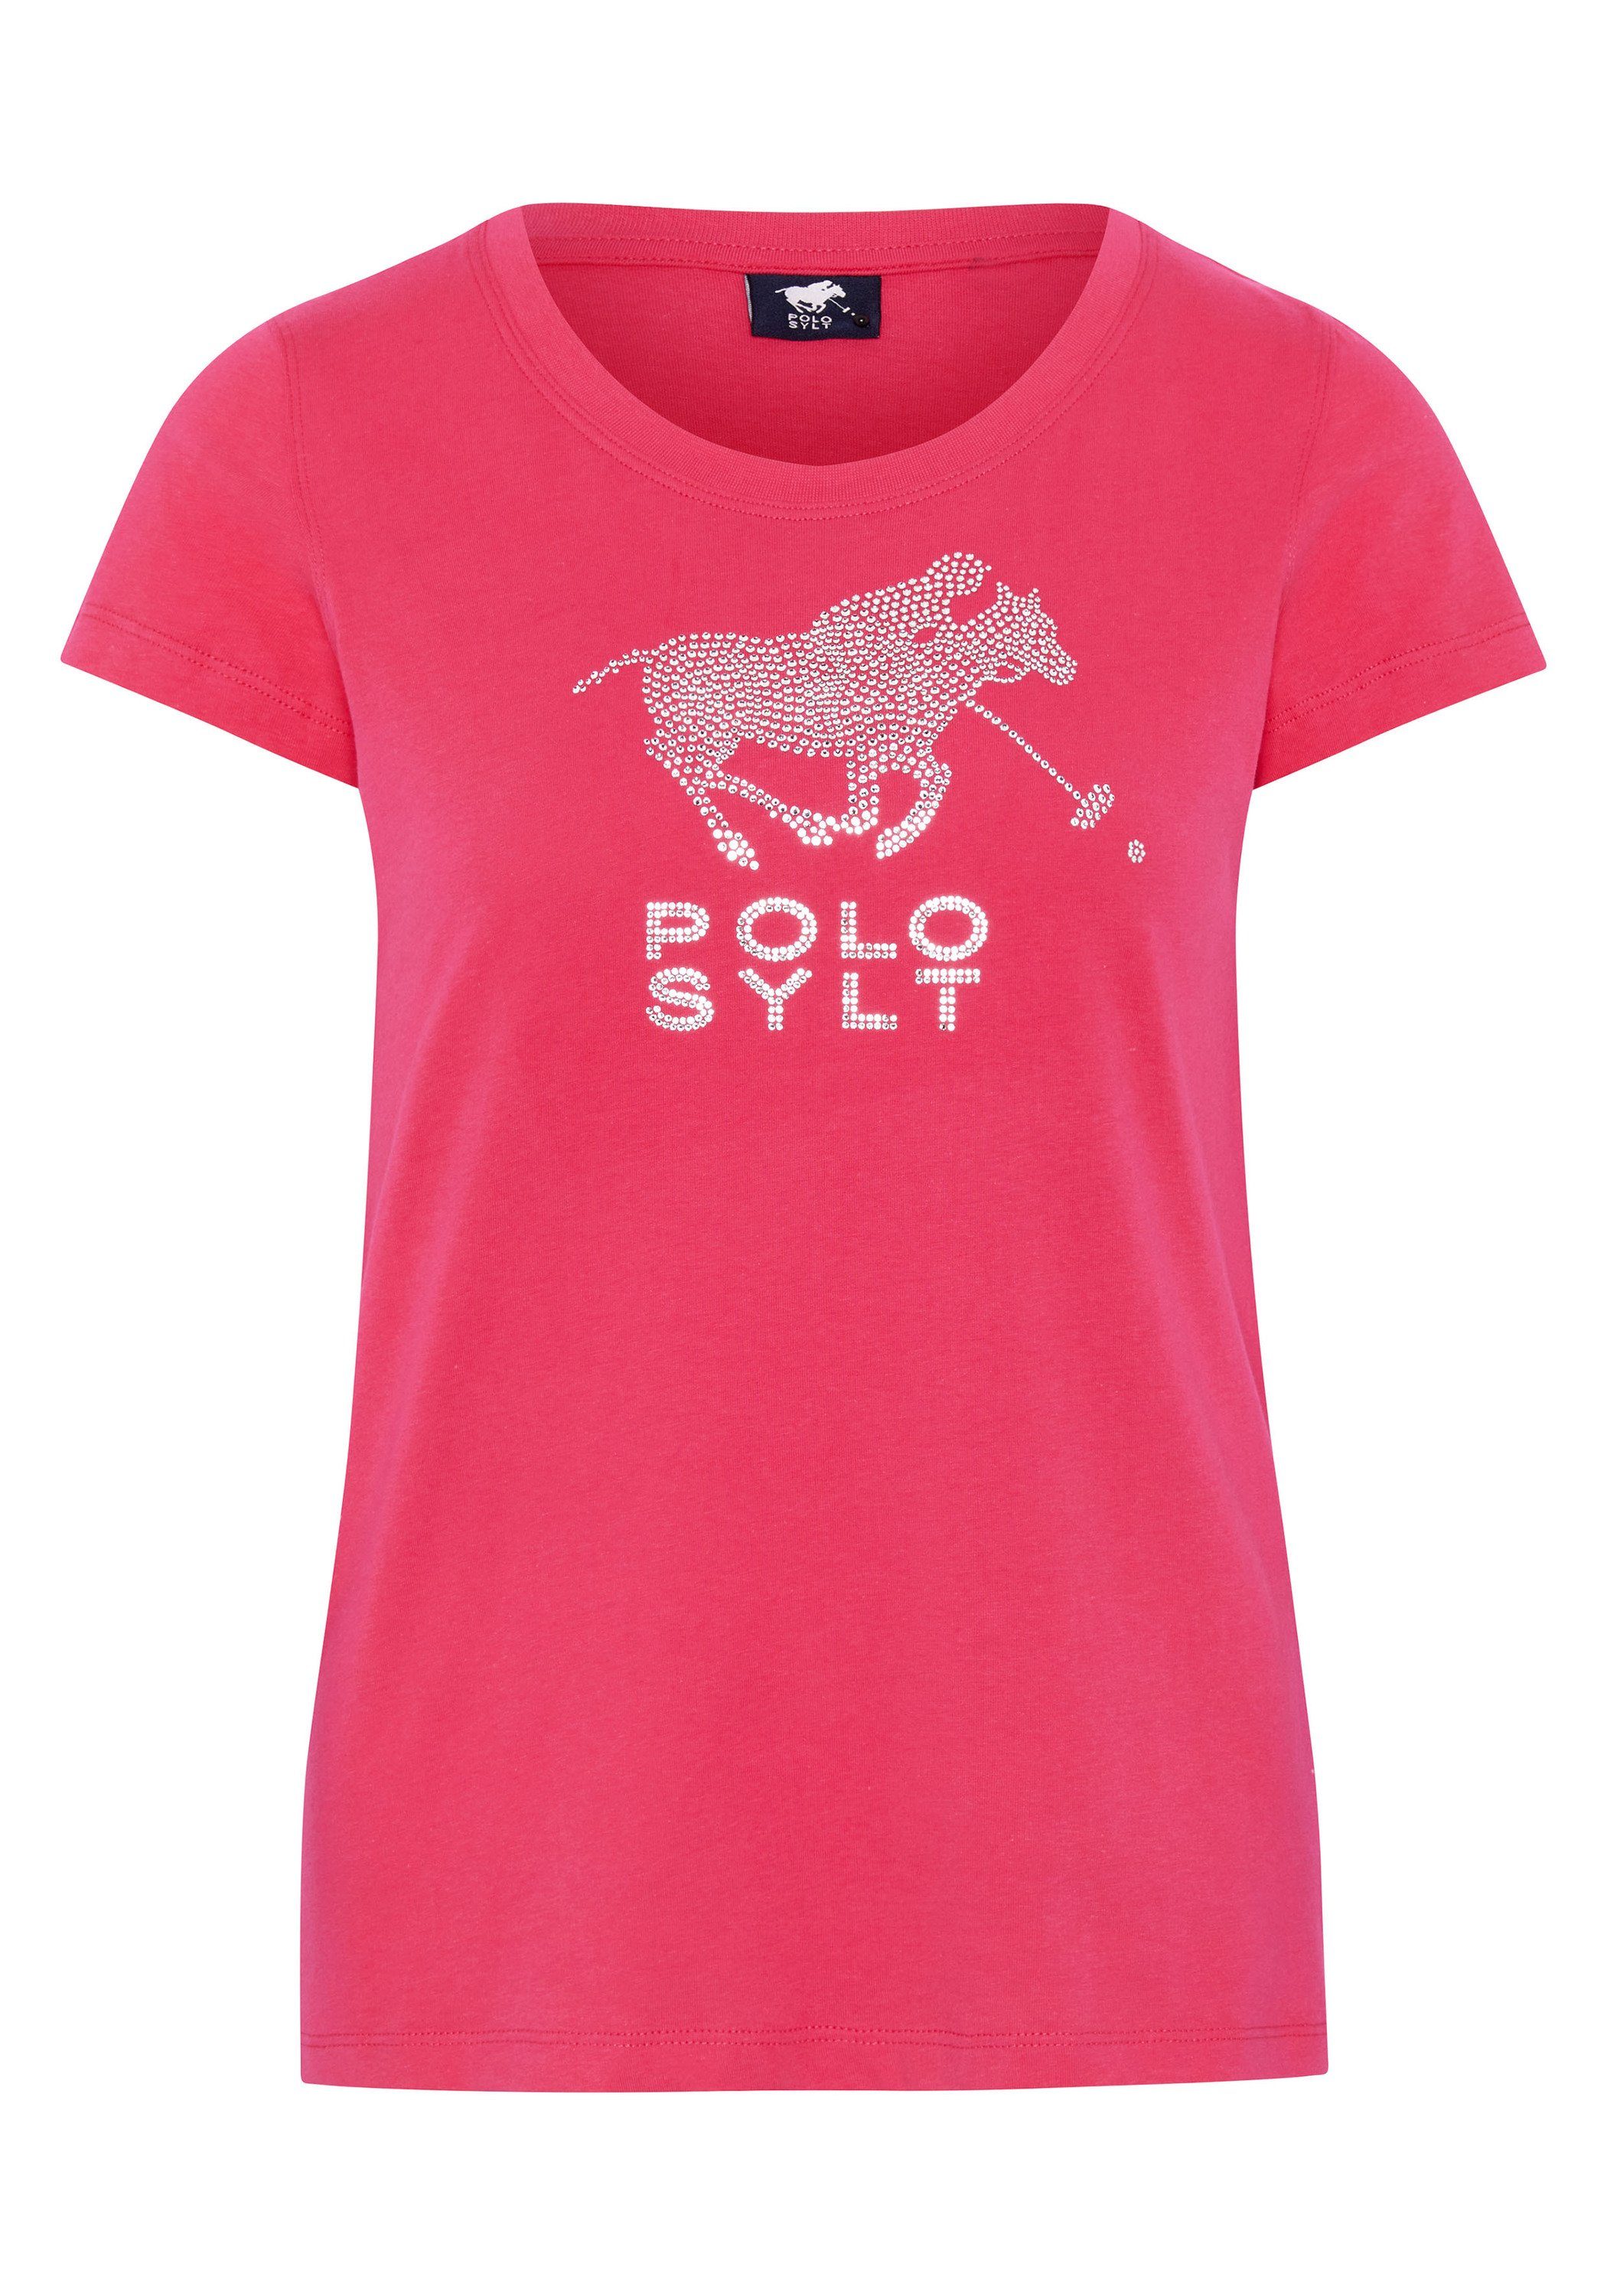 Raspberry T-Shirt Strasssteinen Sylt mit 18-1754 Polo edlen